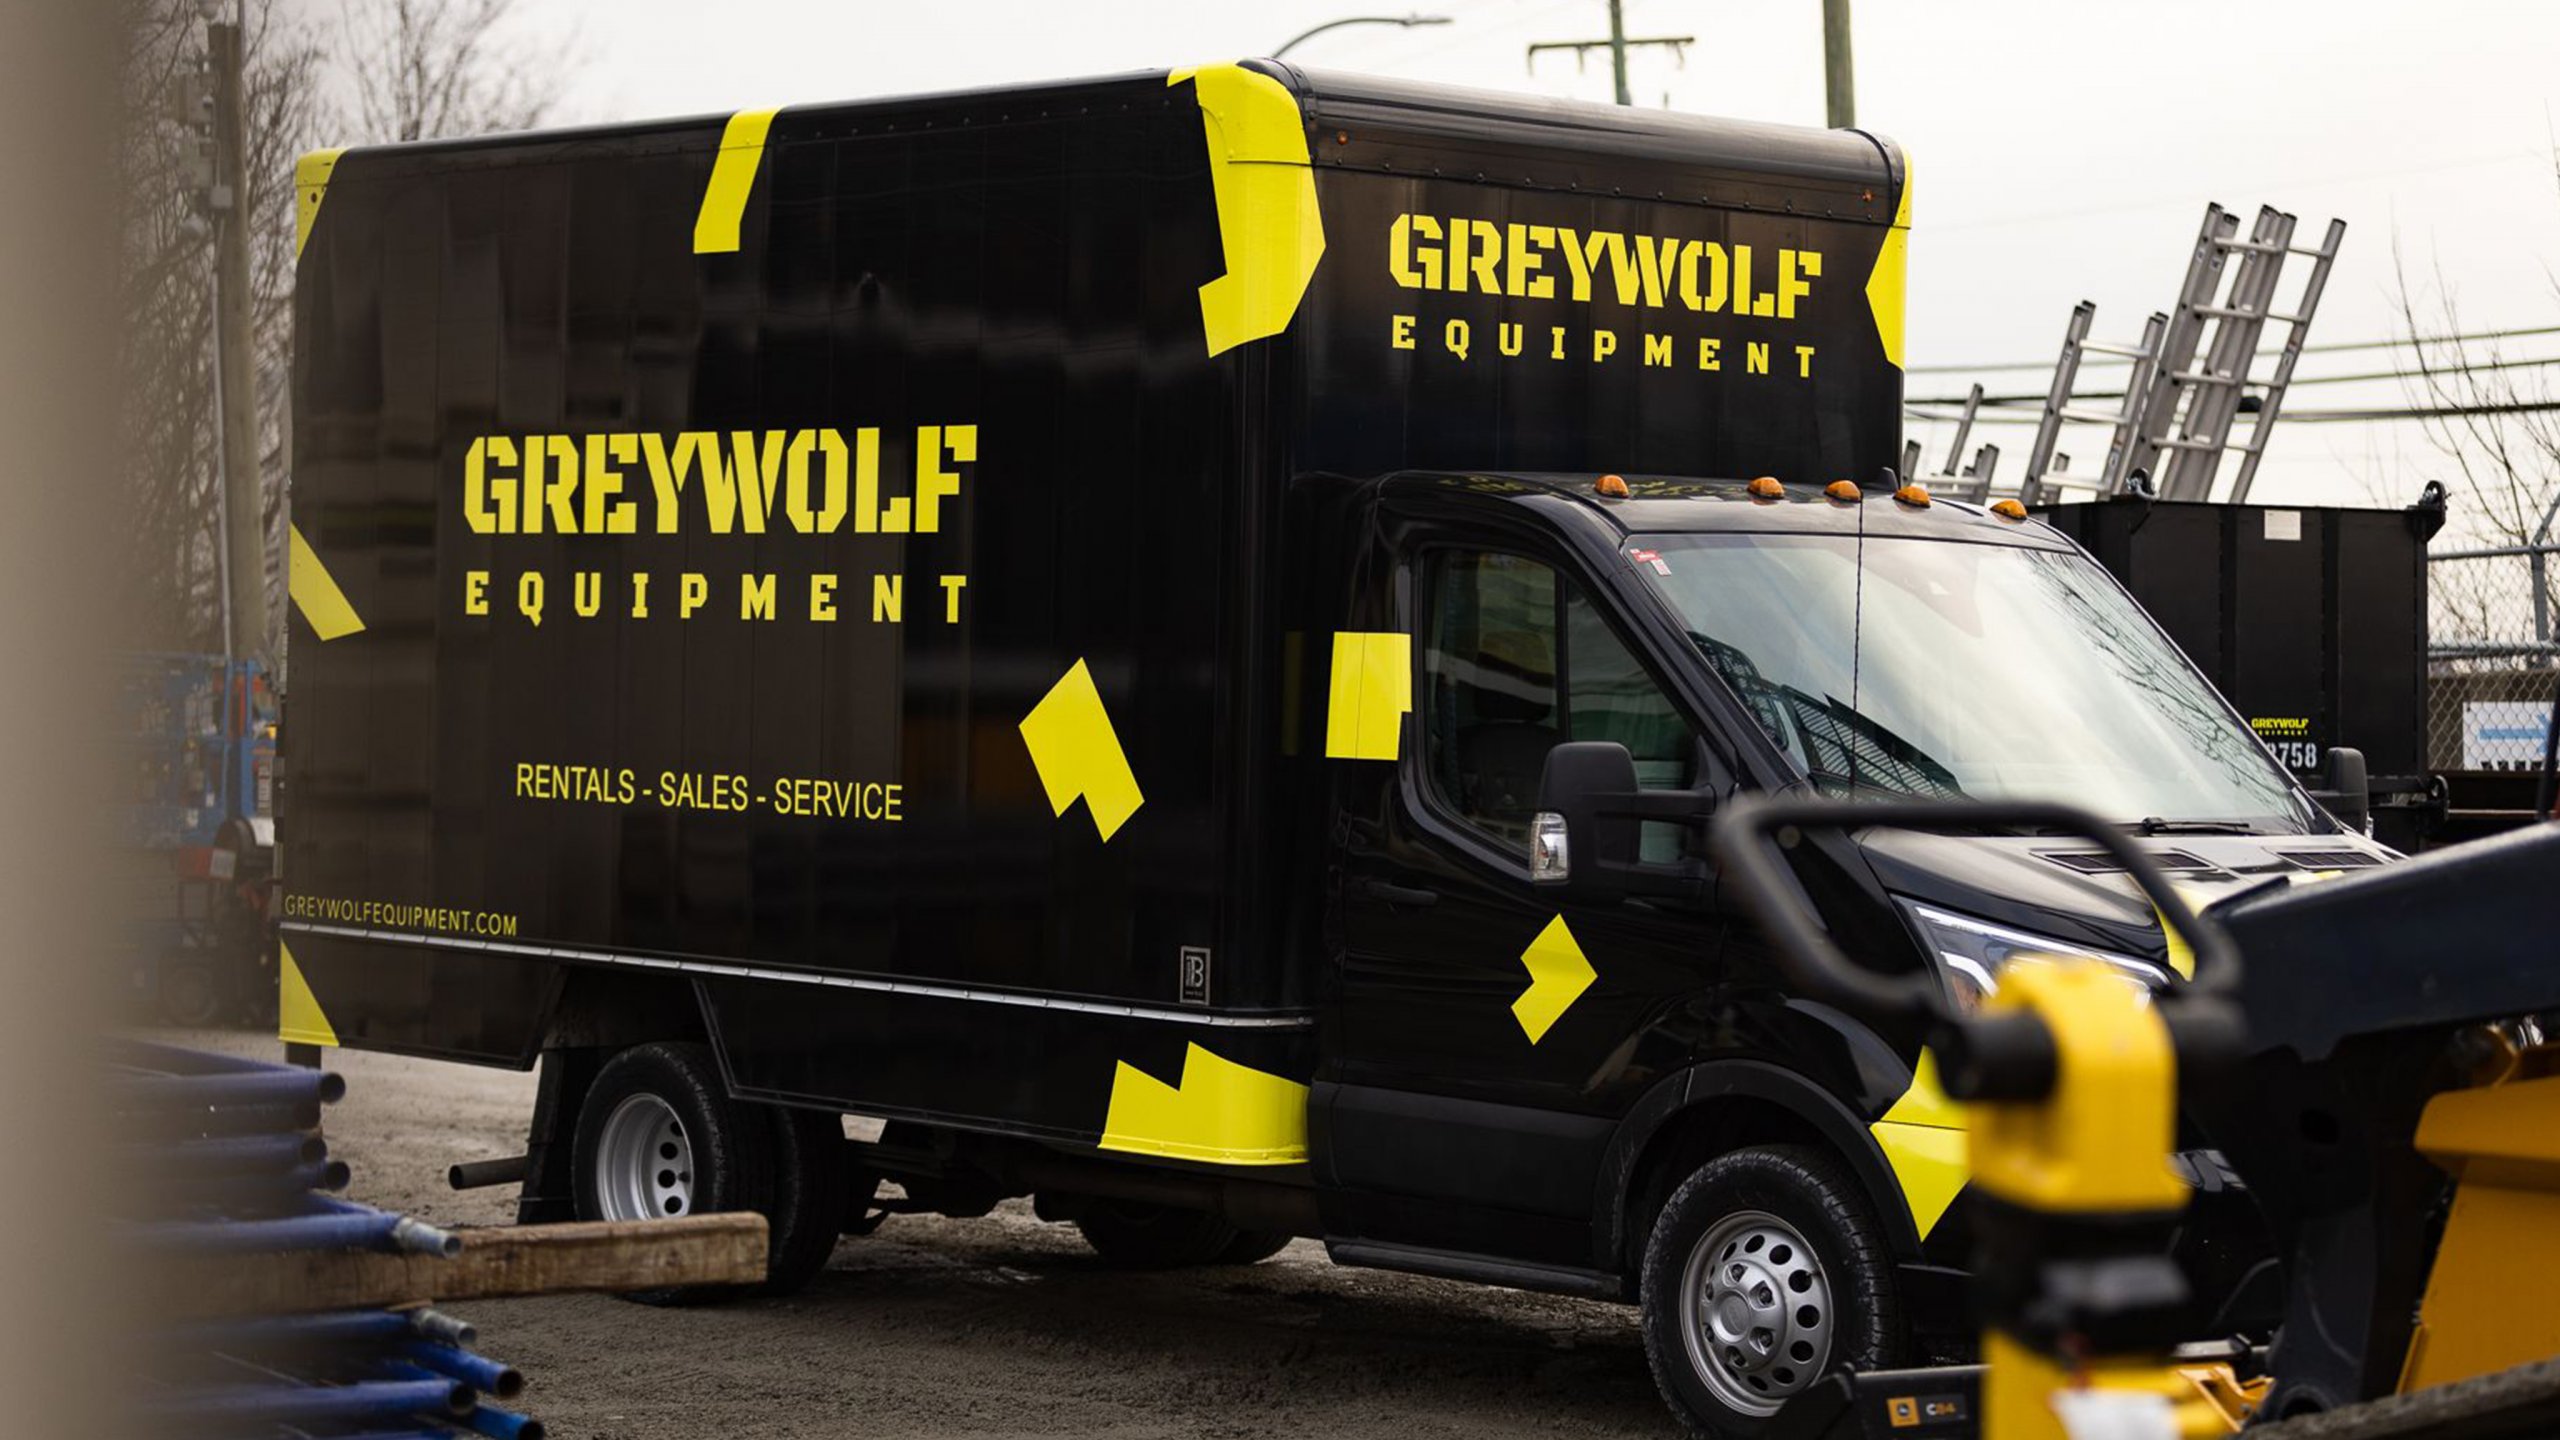 Greywolf Construction Equipment_Brand Identity_Mustaali Raj